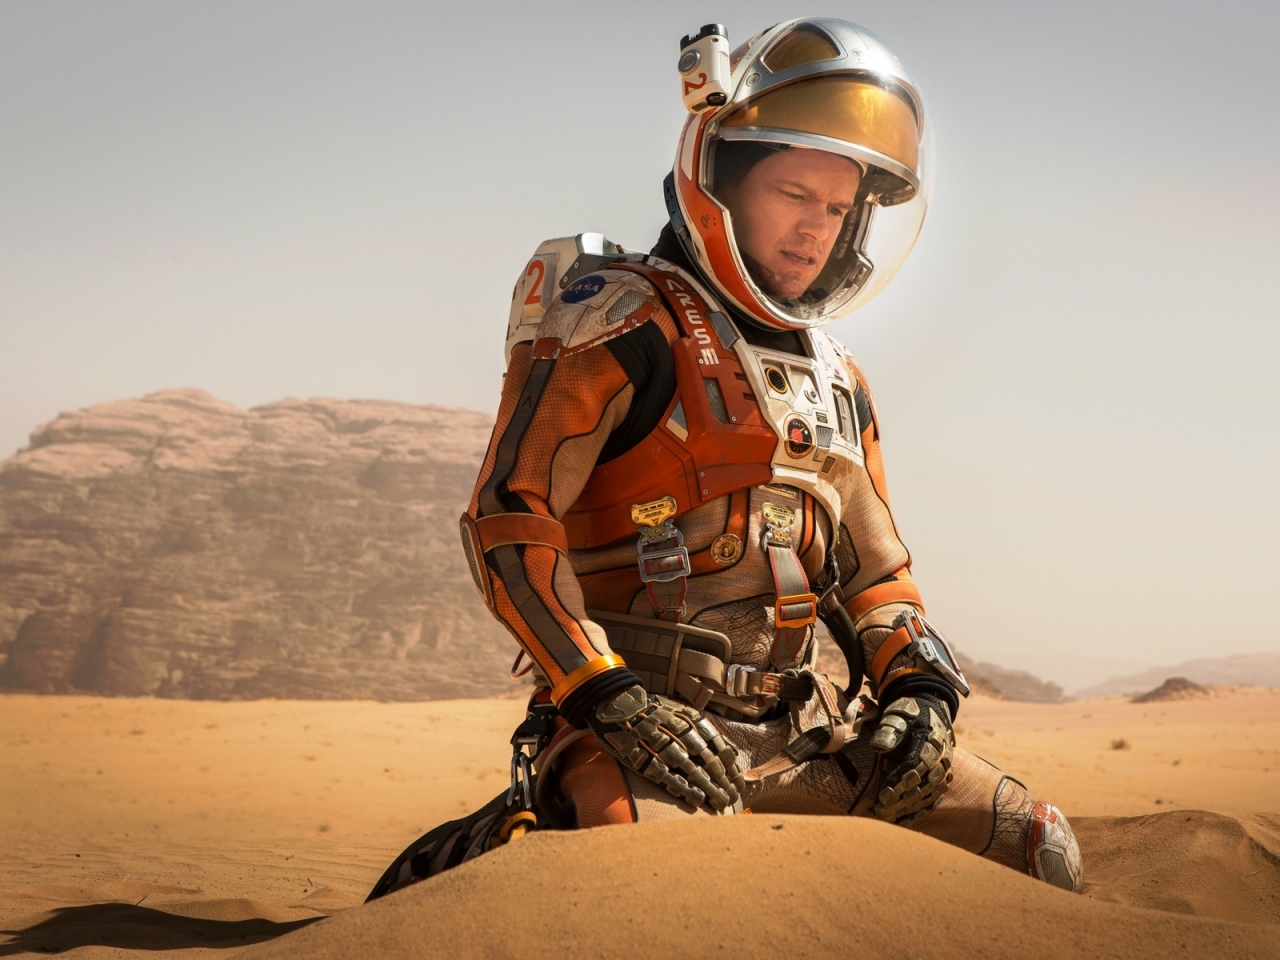 The Martian Matt Damon for 1280 x 960 resolution